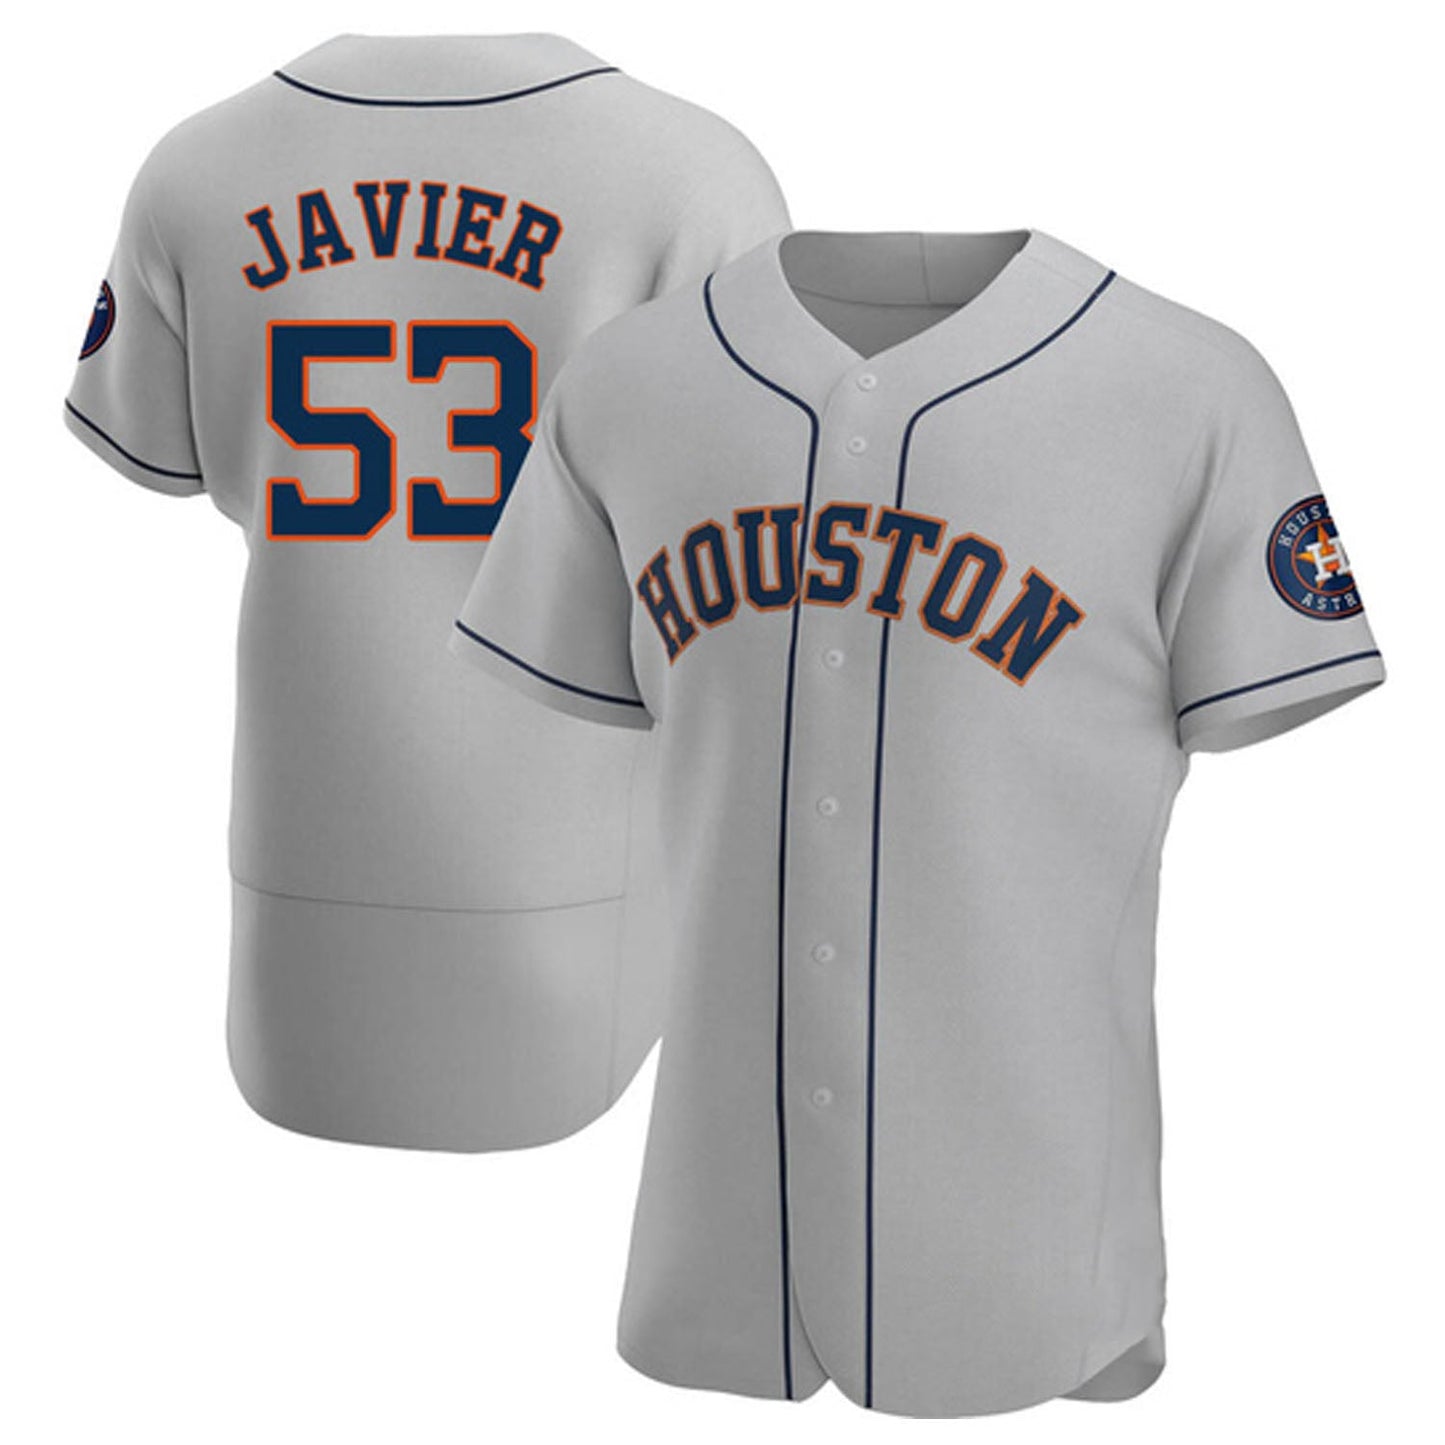 MLB Cristian Javier Houston Astros 53 Jersey